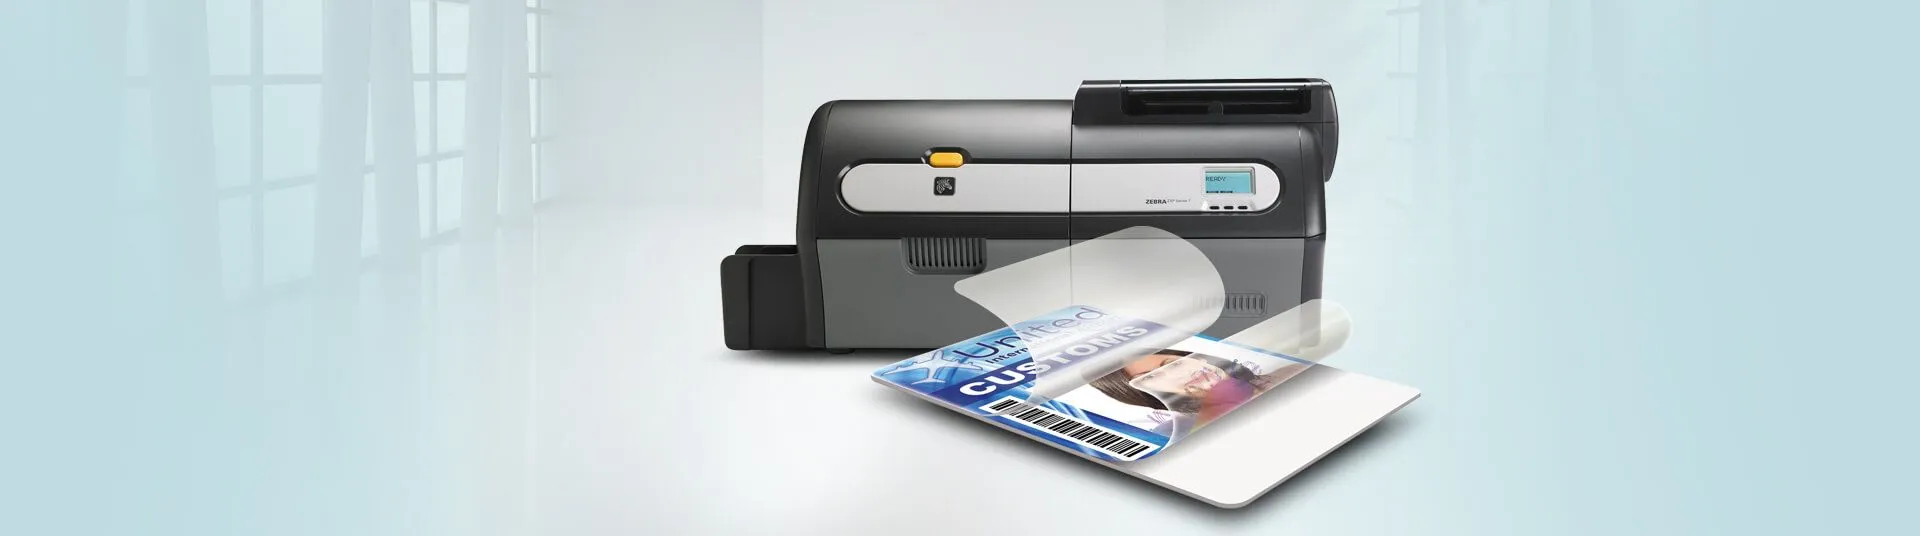 Технологии печати карт на принтерах